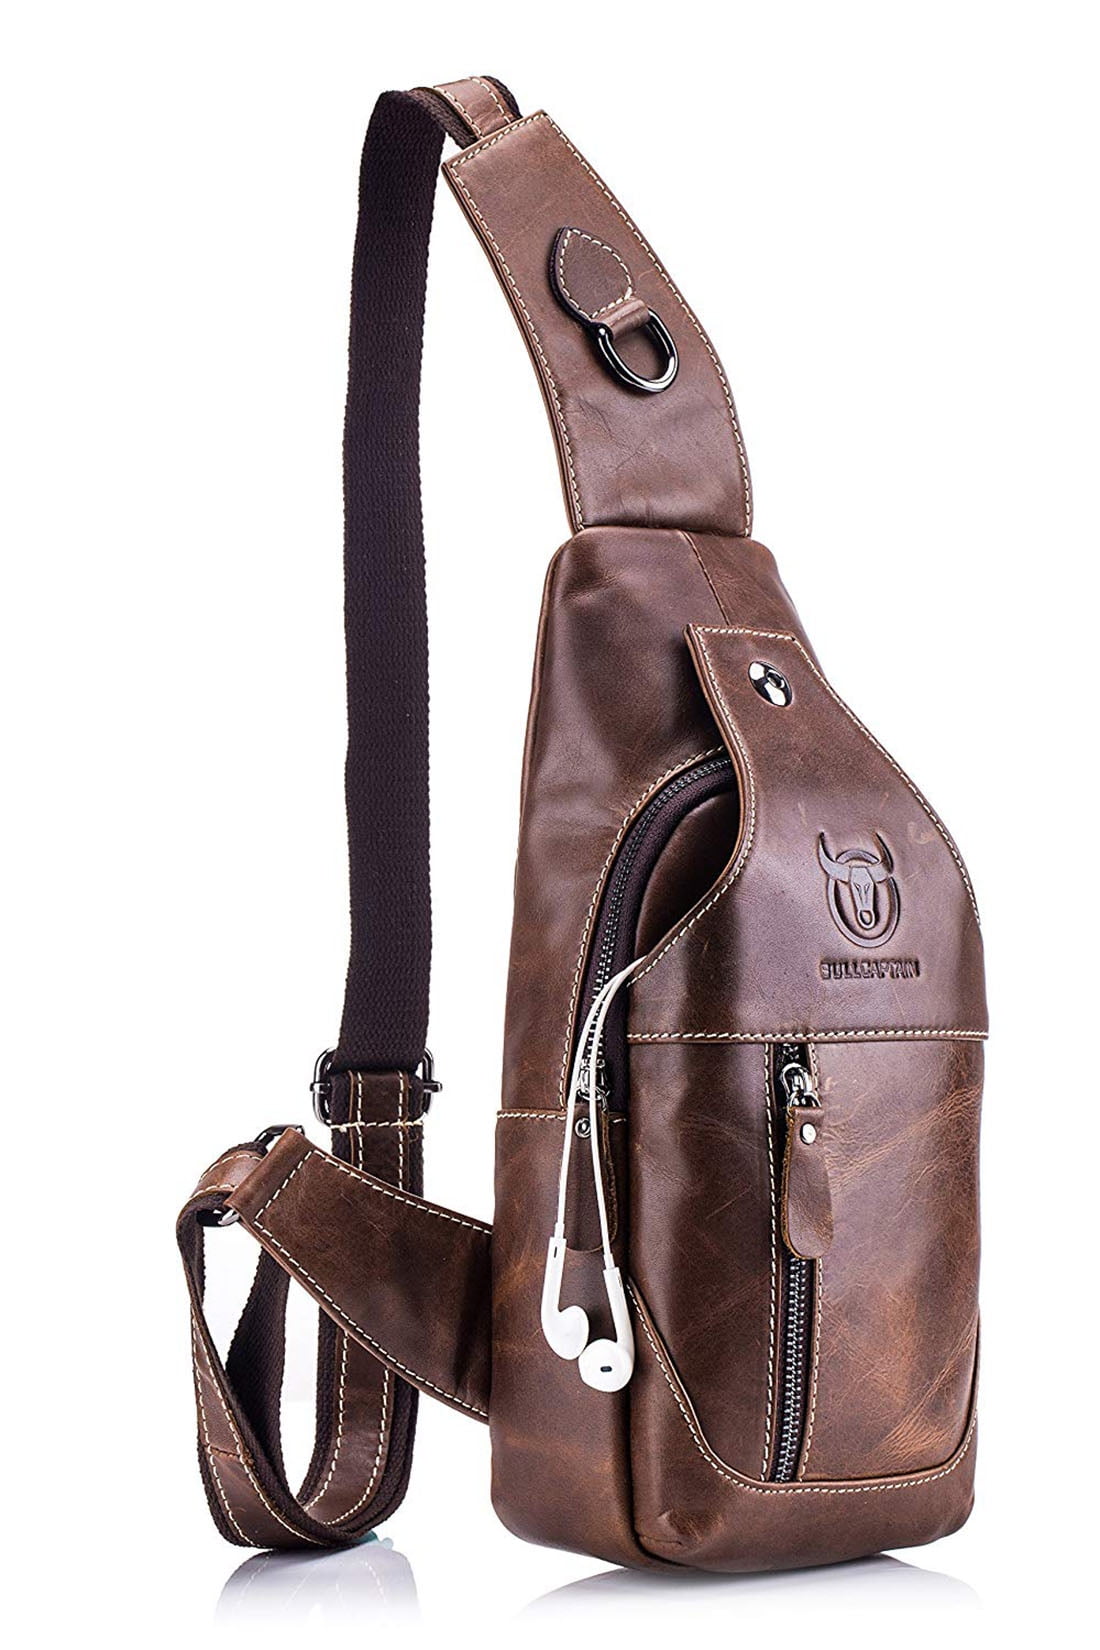 Leathario Genuine Leather Sling Bag for Men Chest Crossbody Shoulder Backpack Small Daypack Multipurpose Casual Travel 